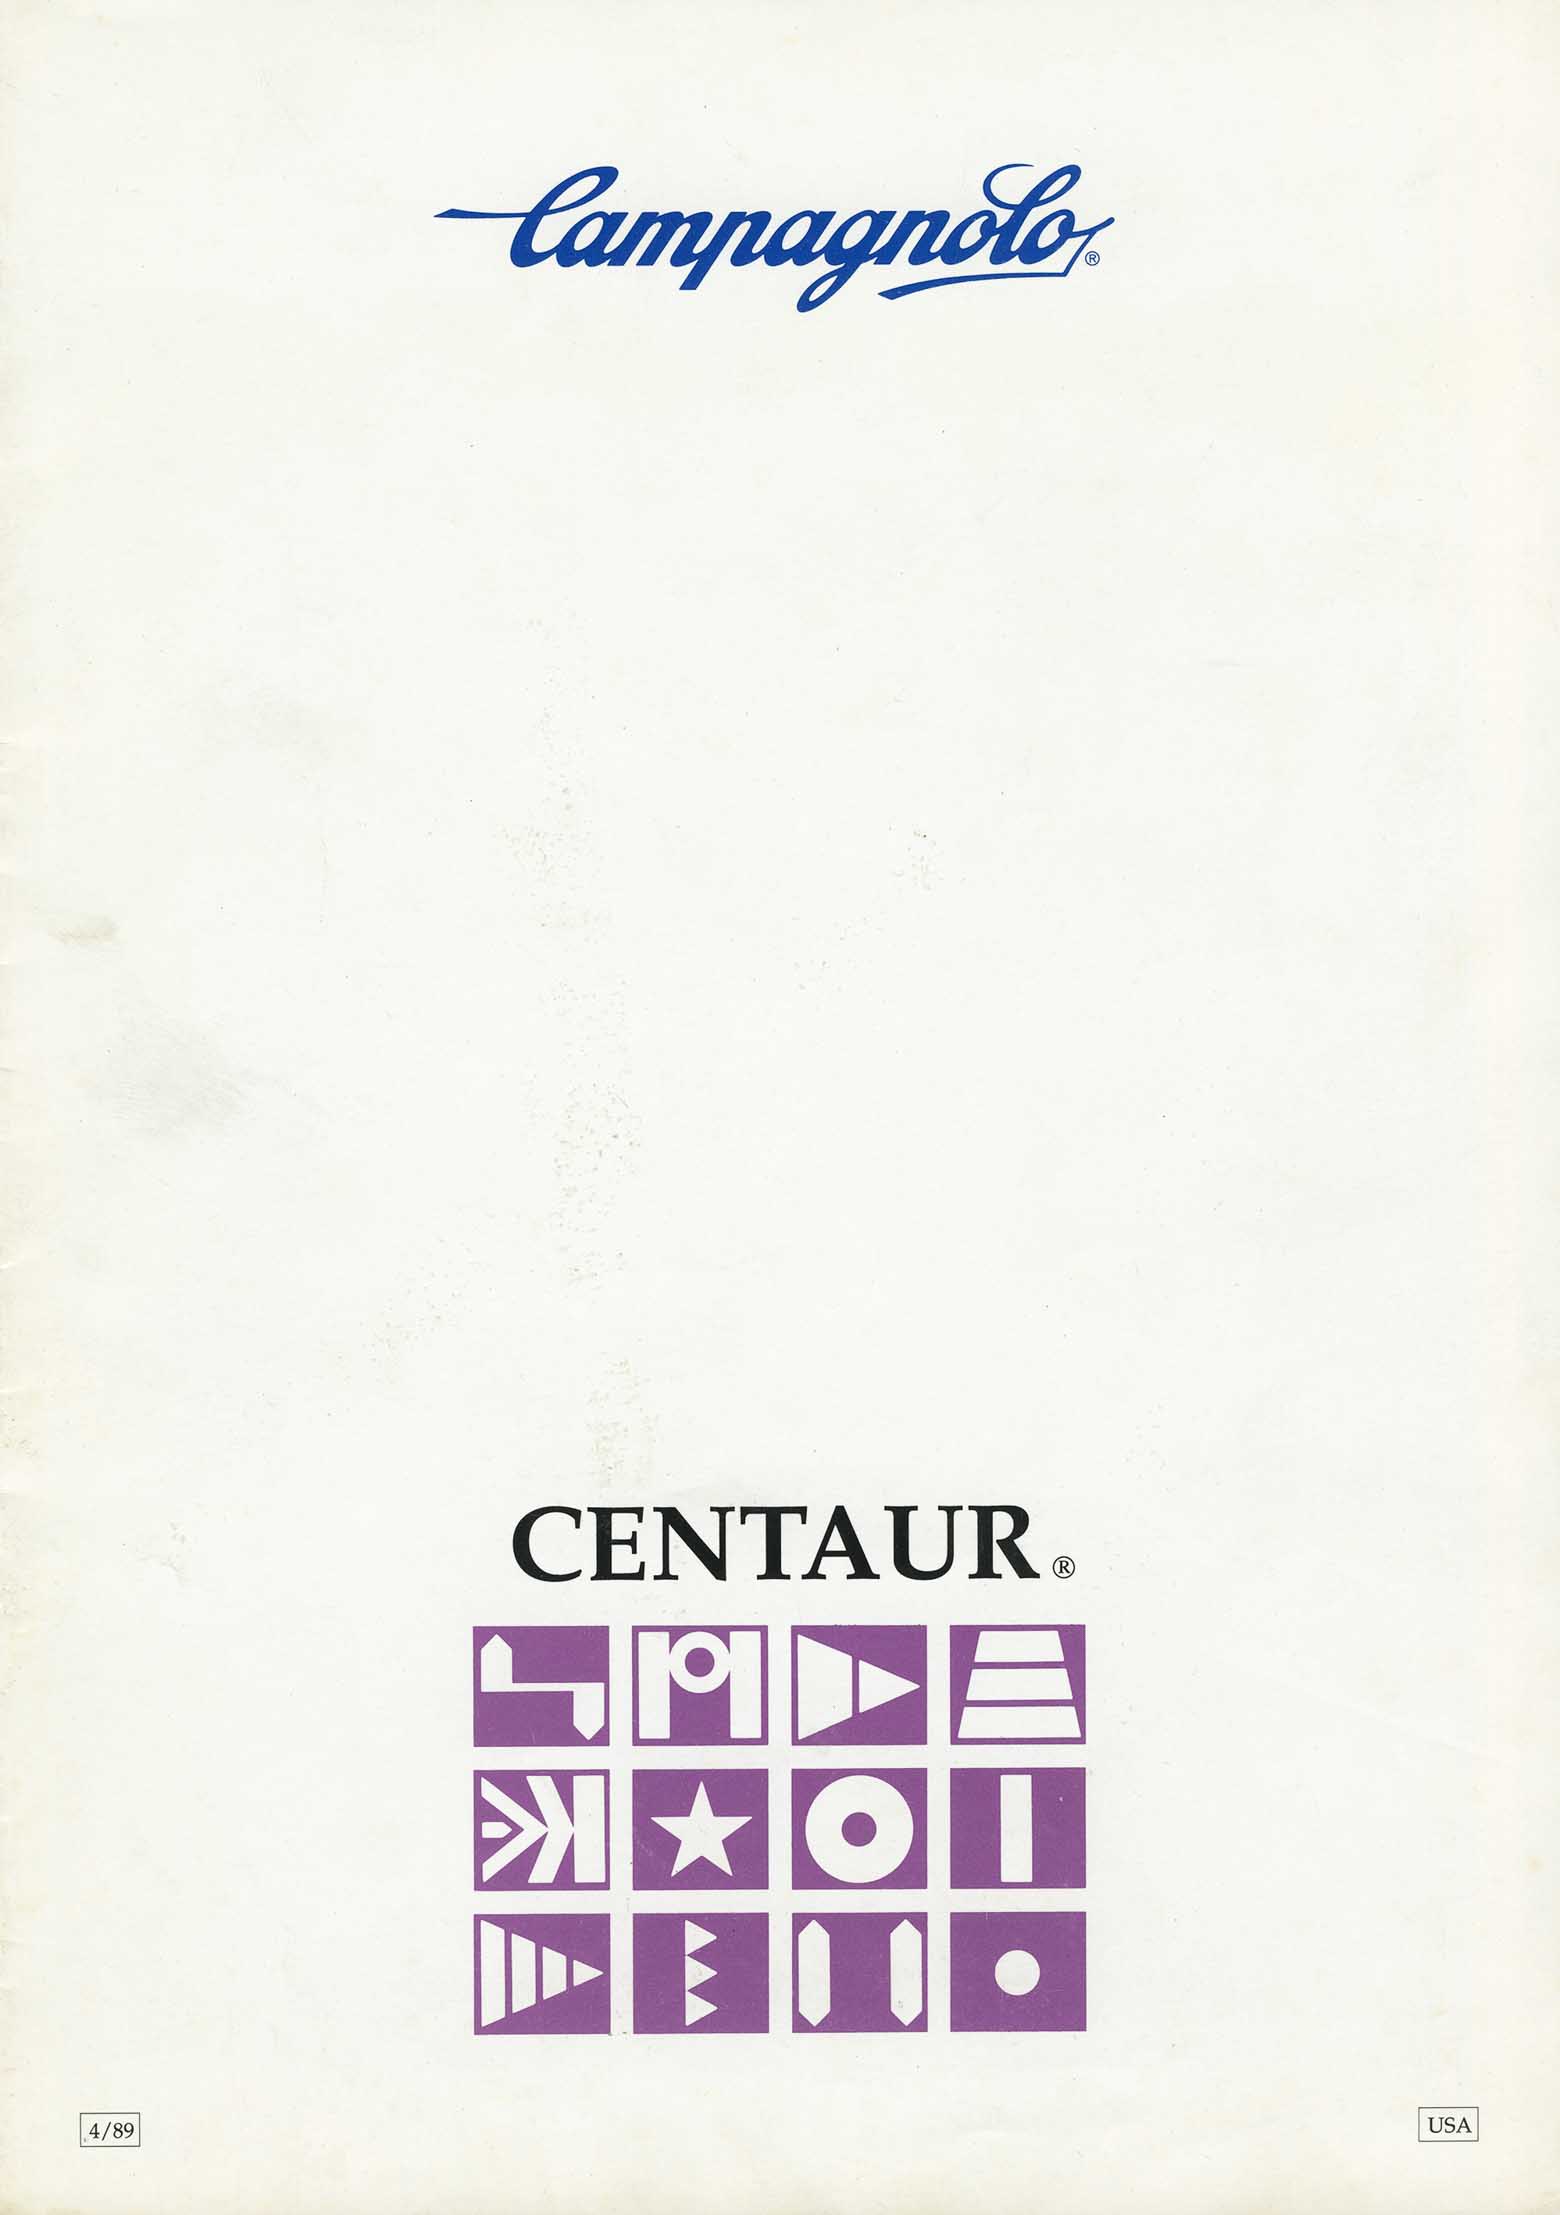 Campagnolo - Centaur scan 01 main image